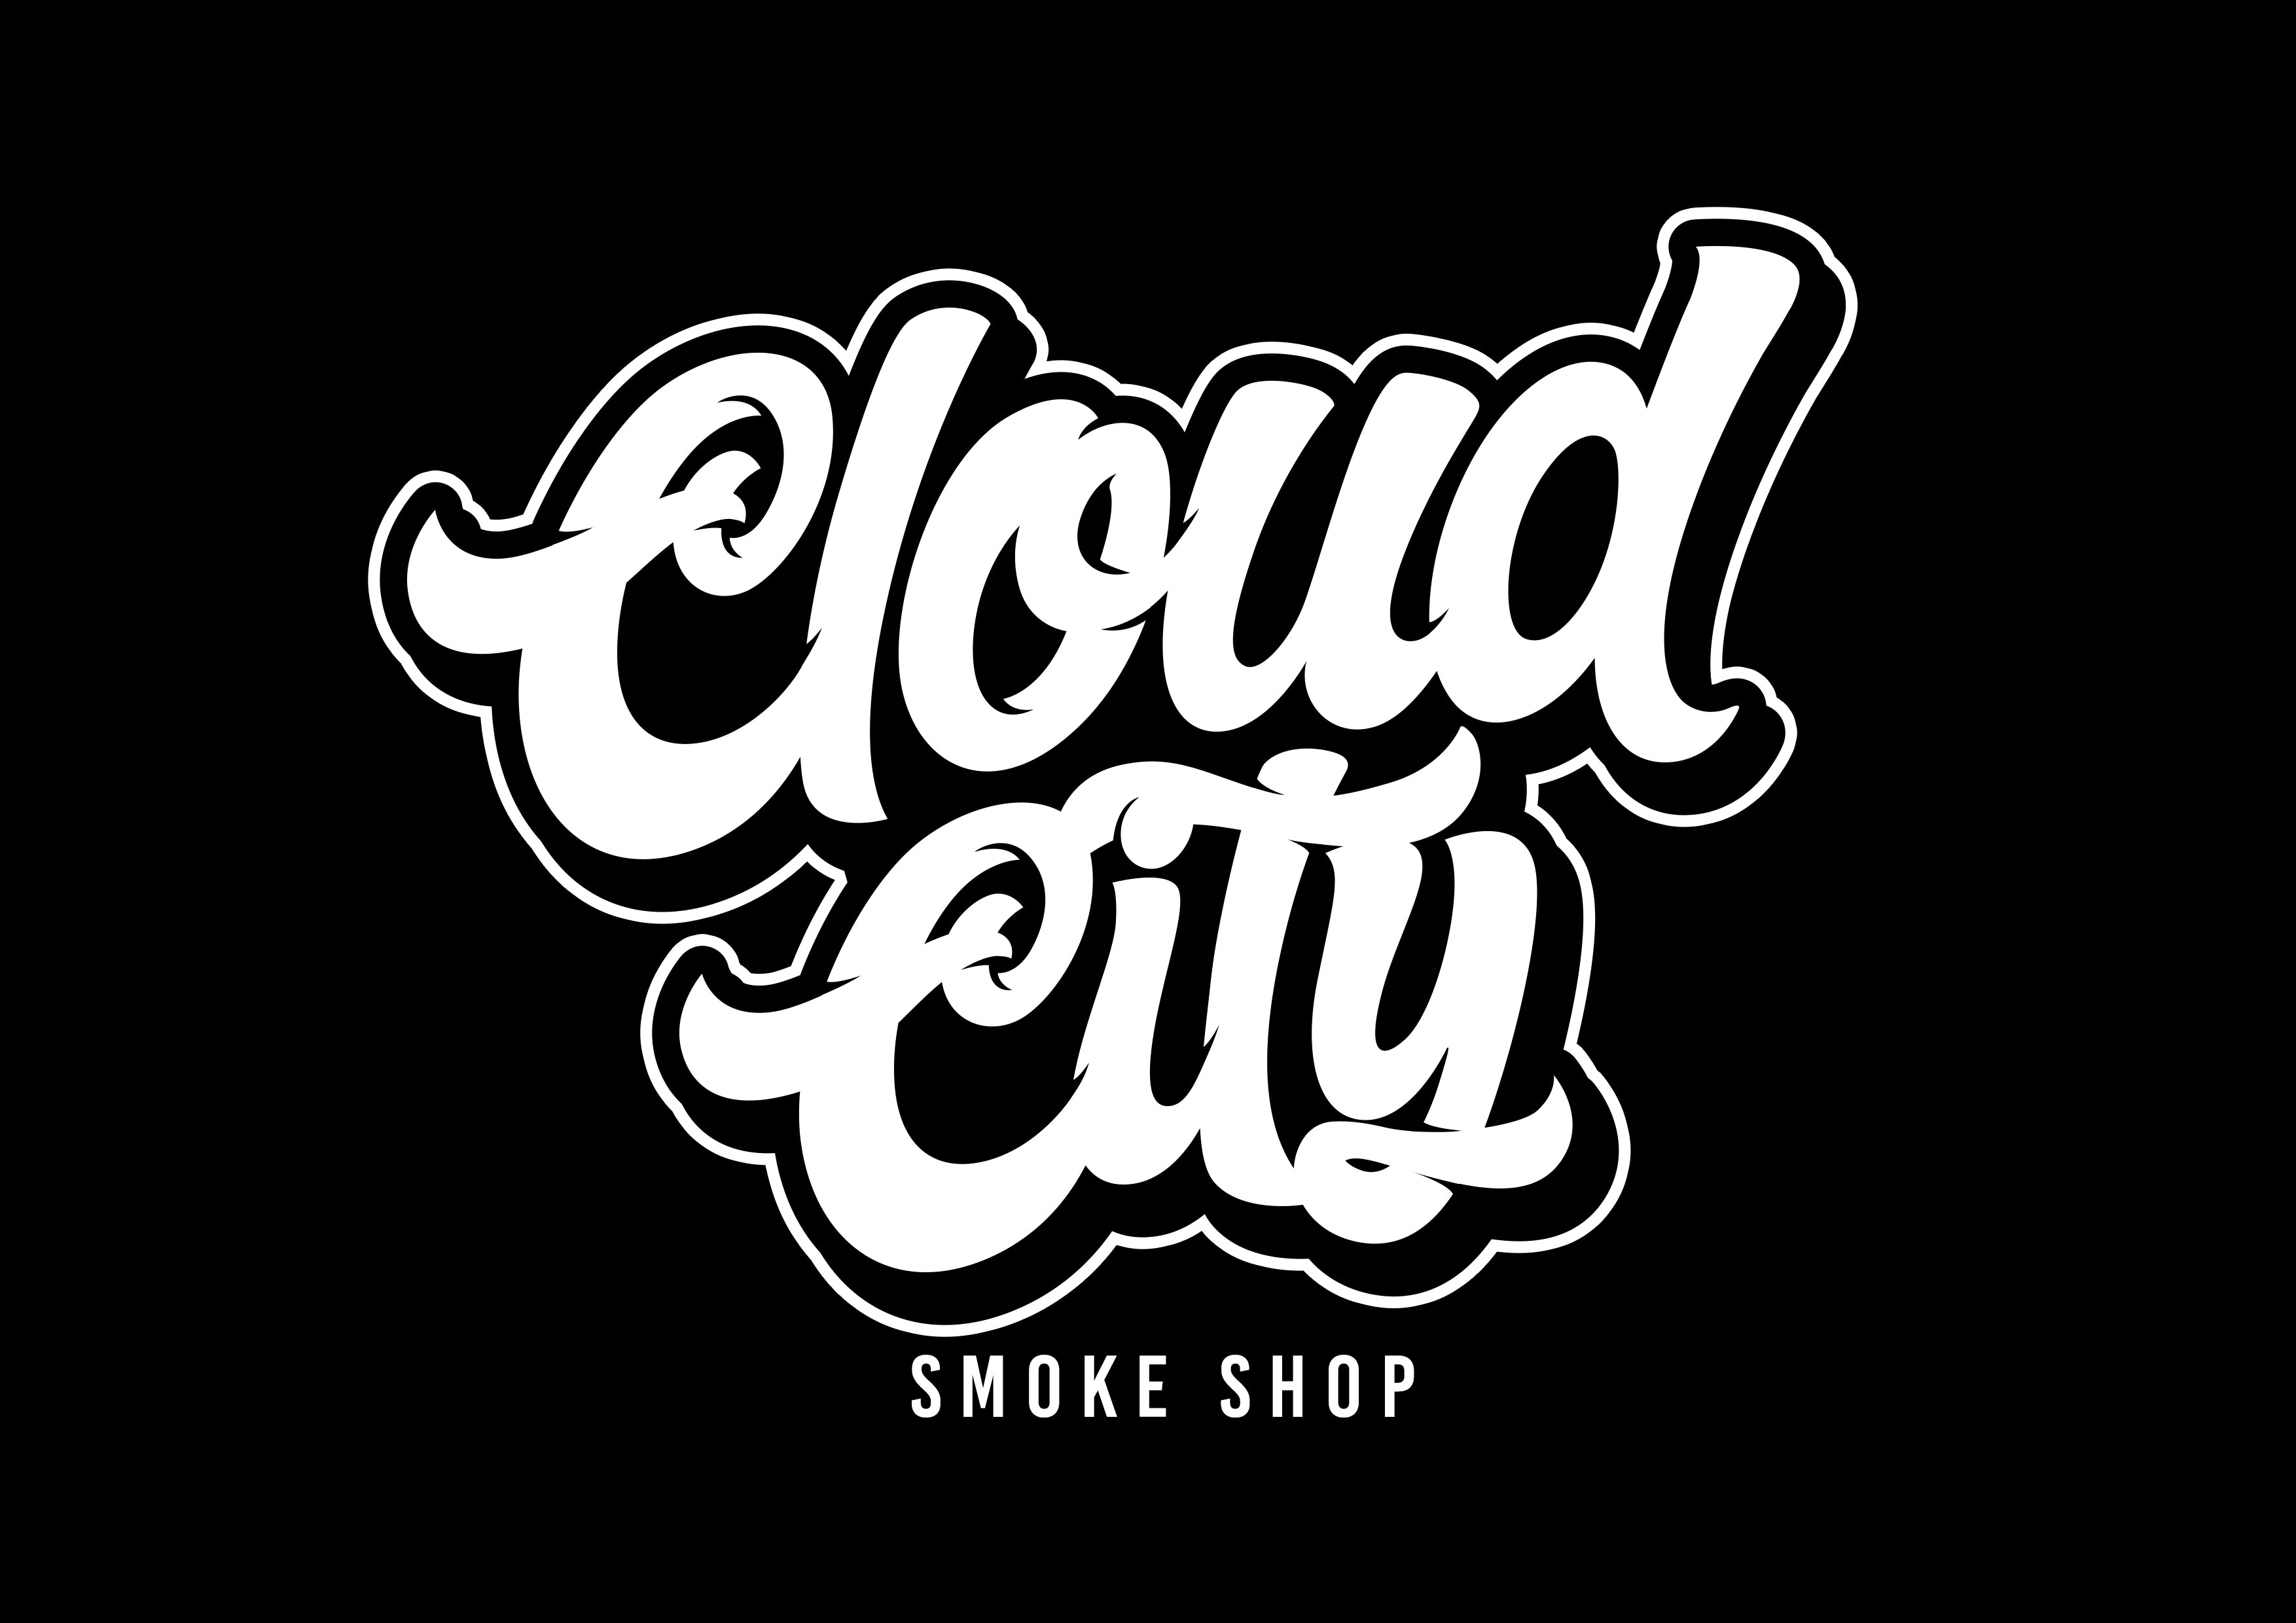 Cloud City Smokeshop